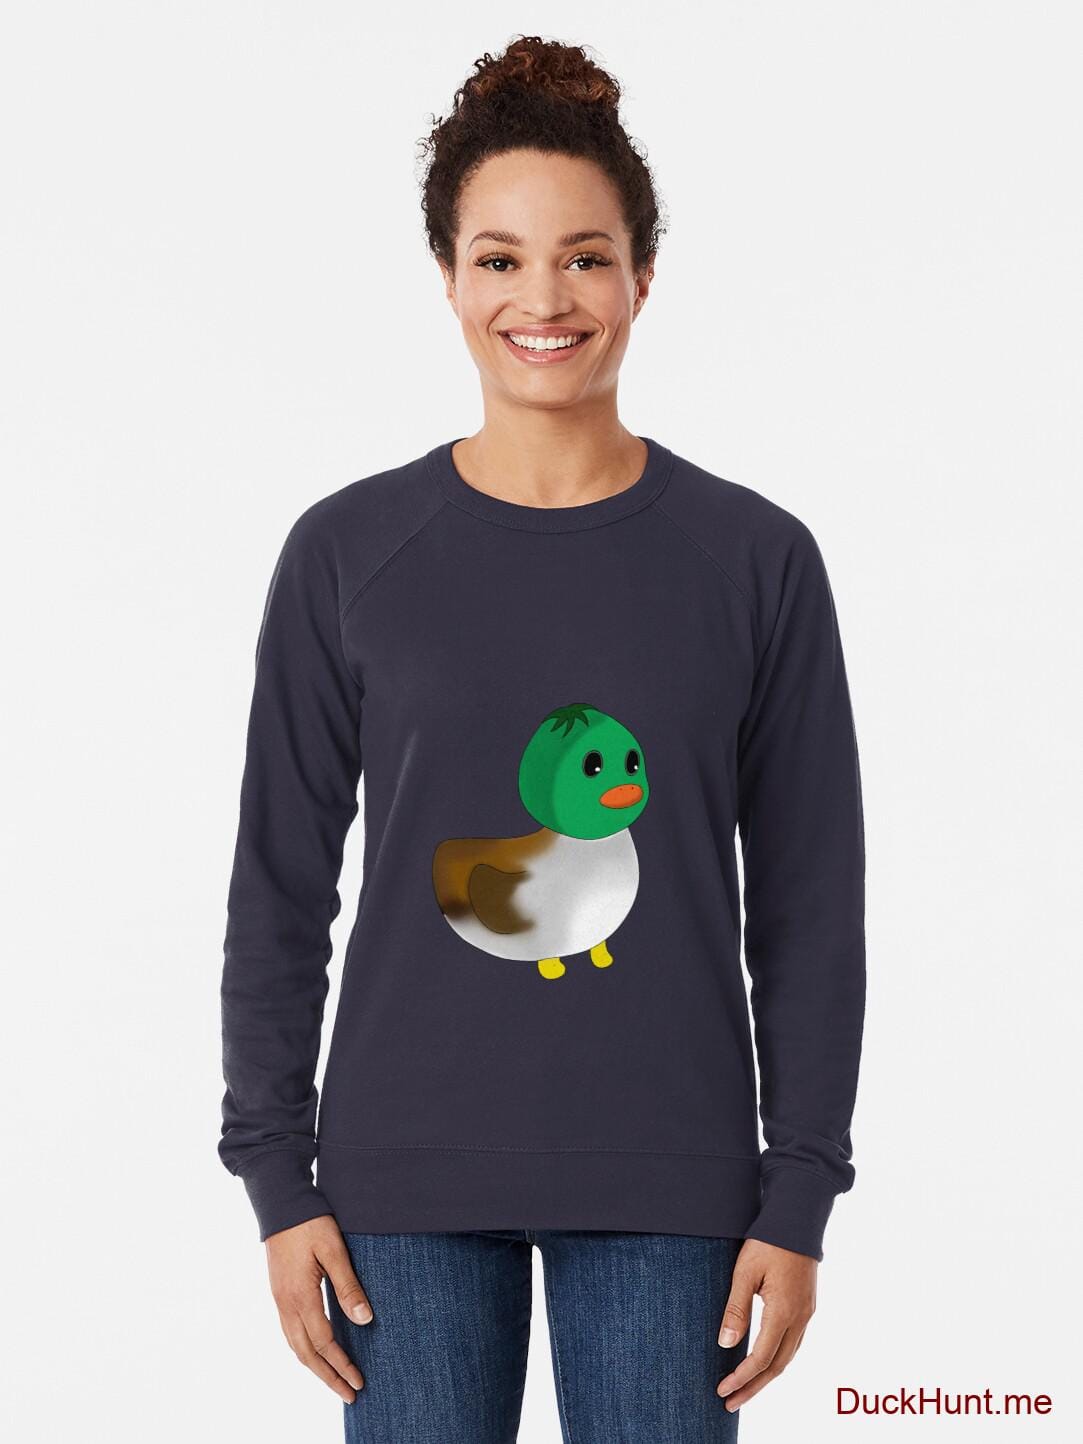 Normal Duck Navy Lightweight Sweatshirt alternative image 1